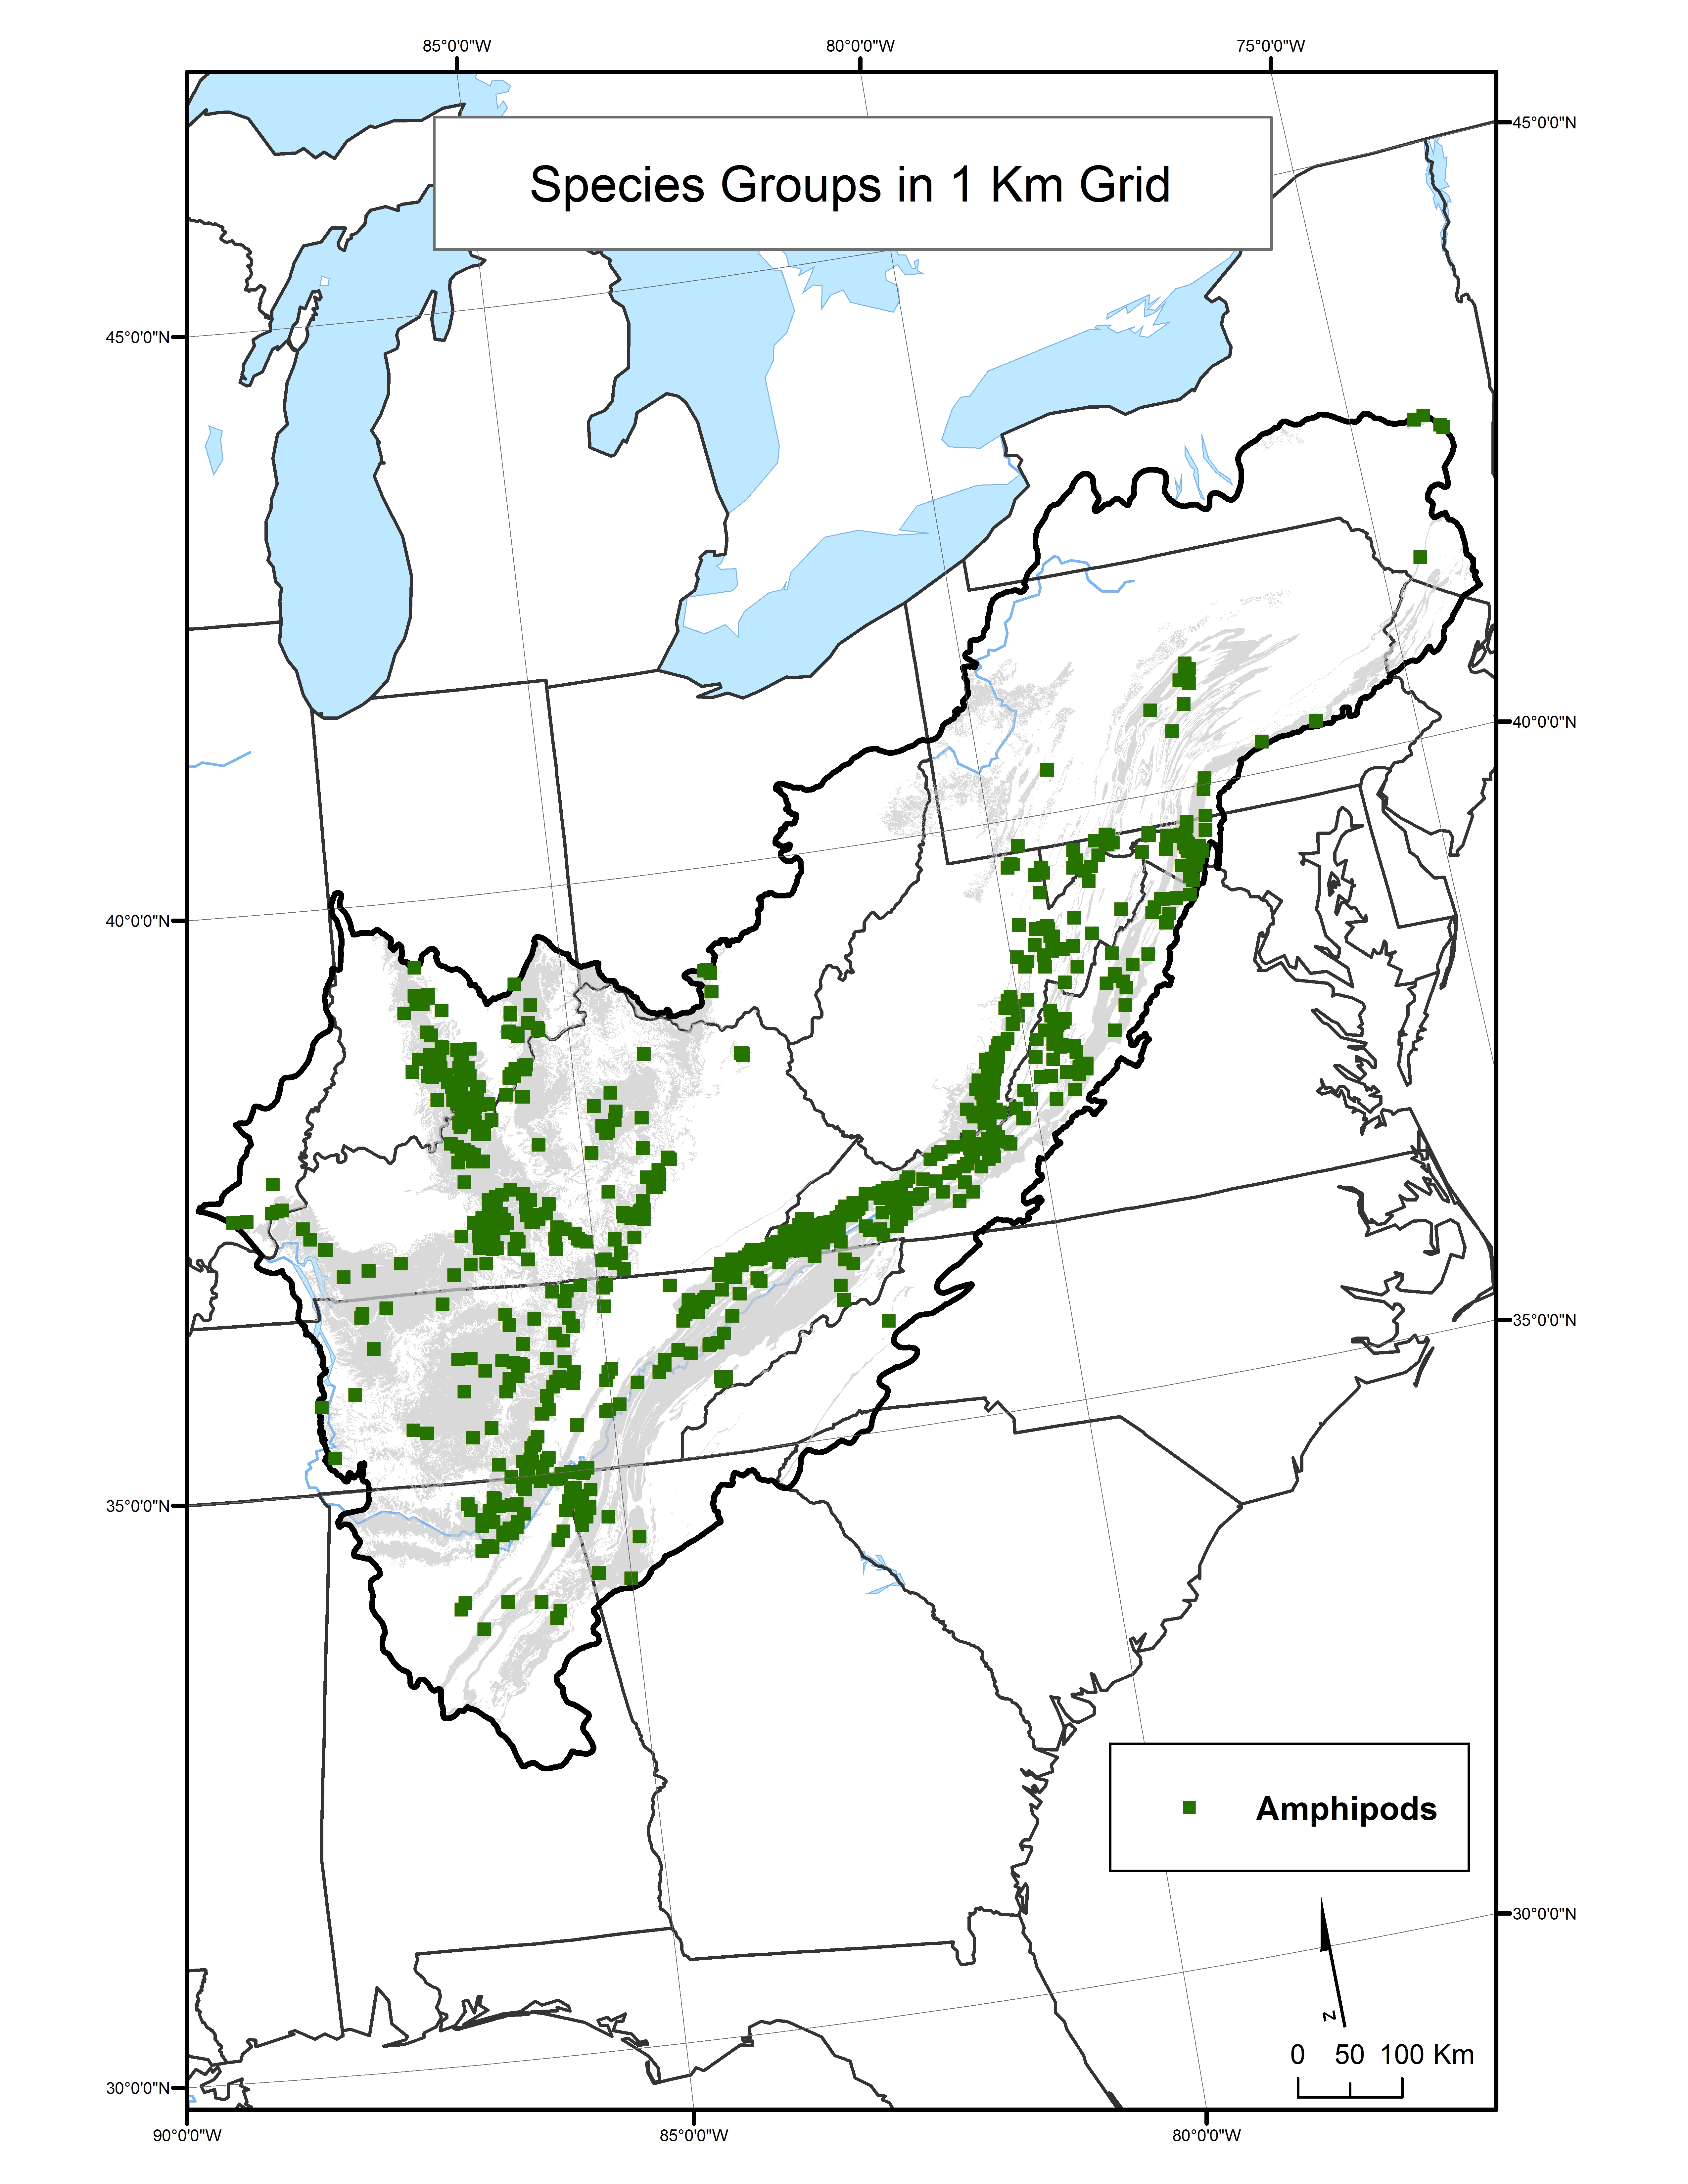 Amphipod Species Distribution by 1 km Grid